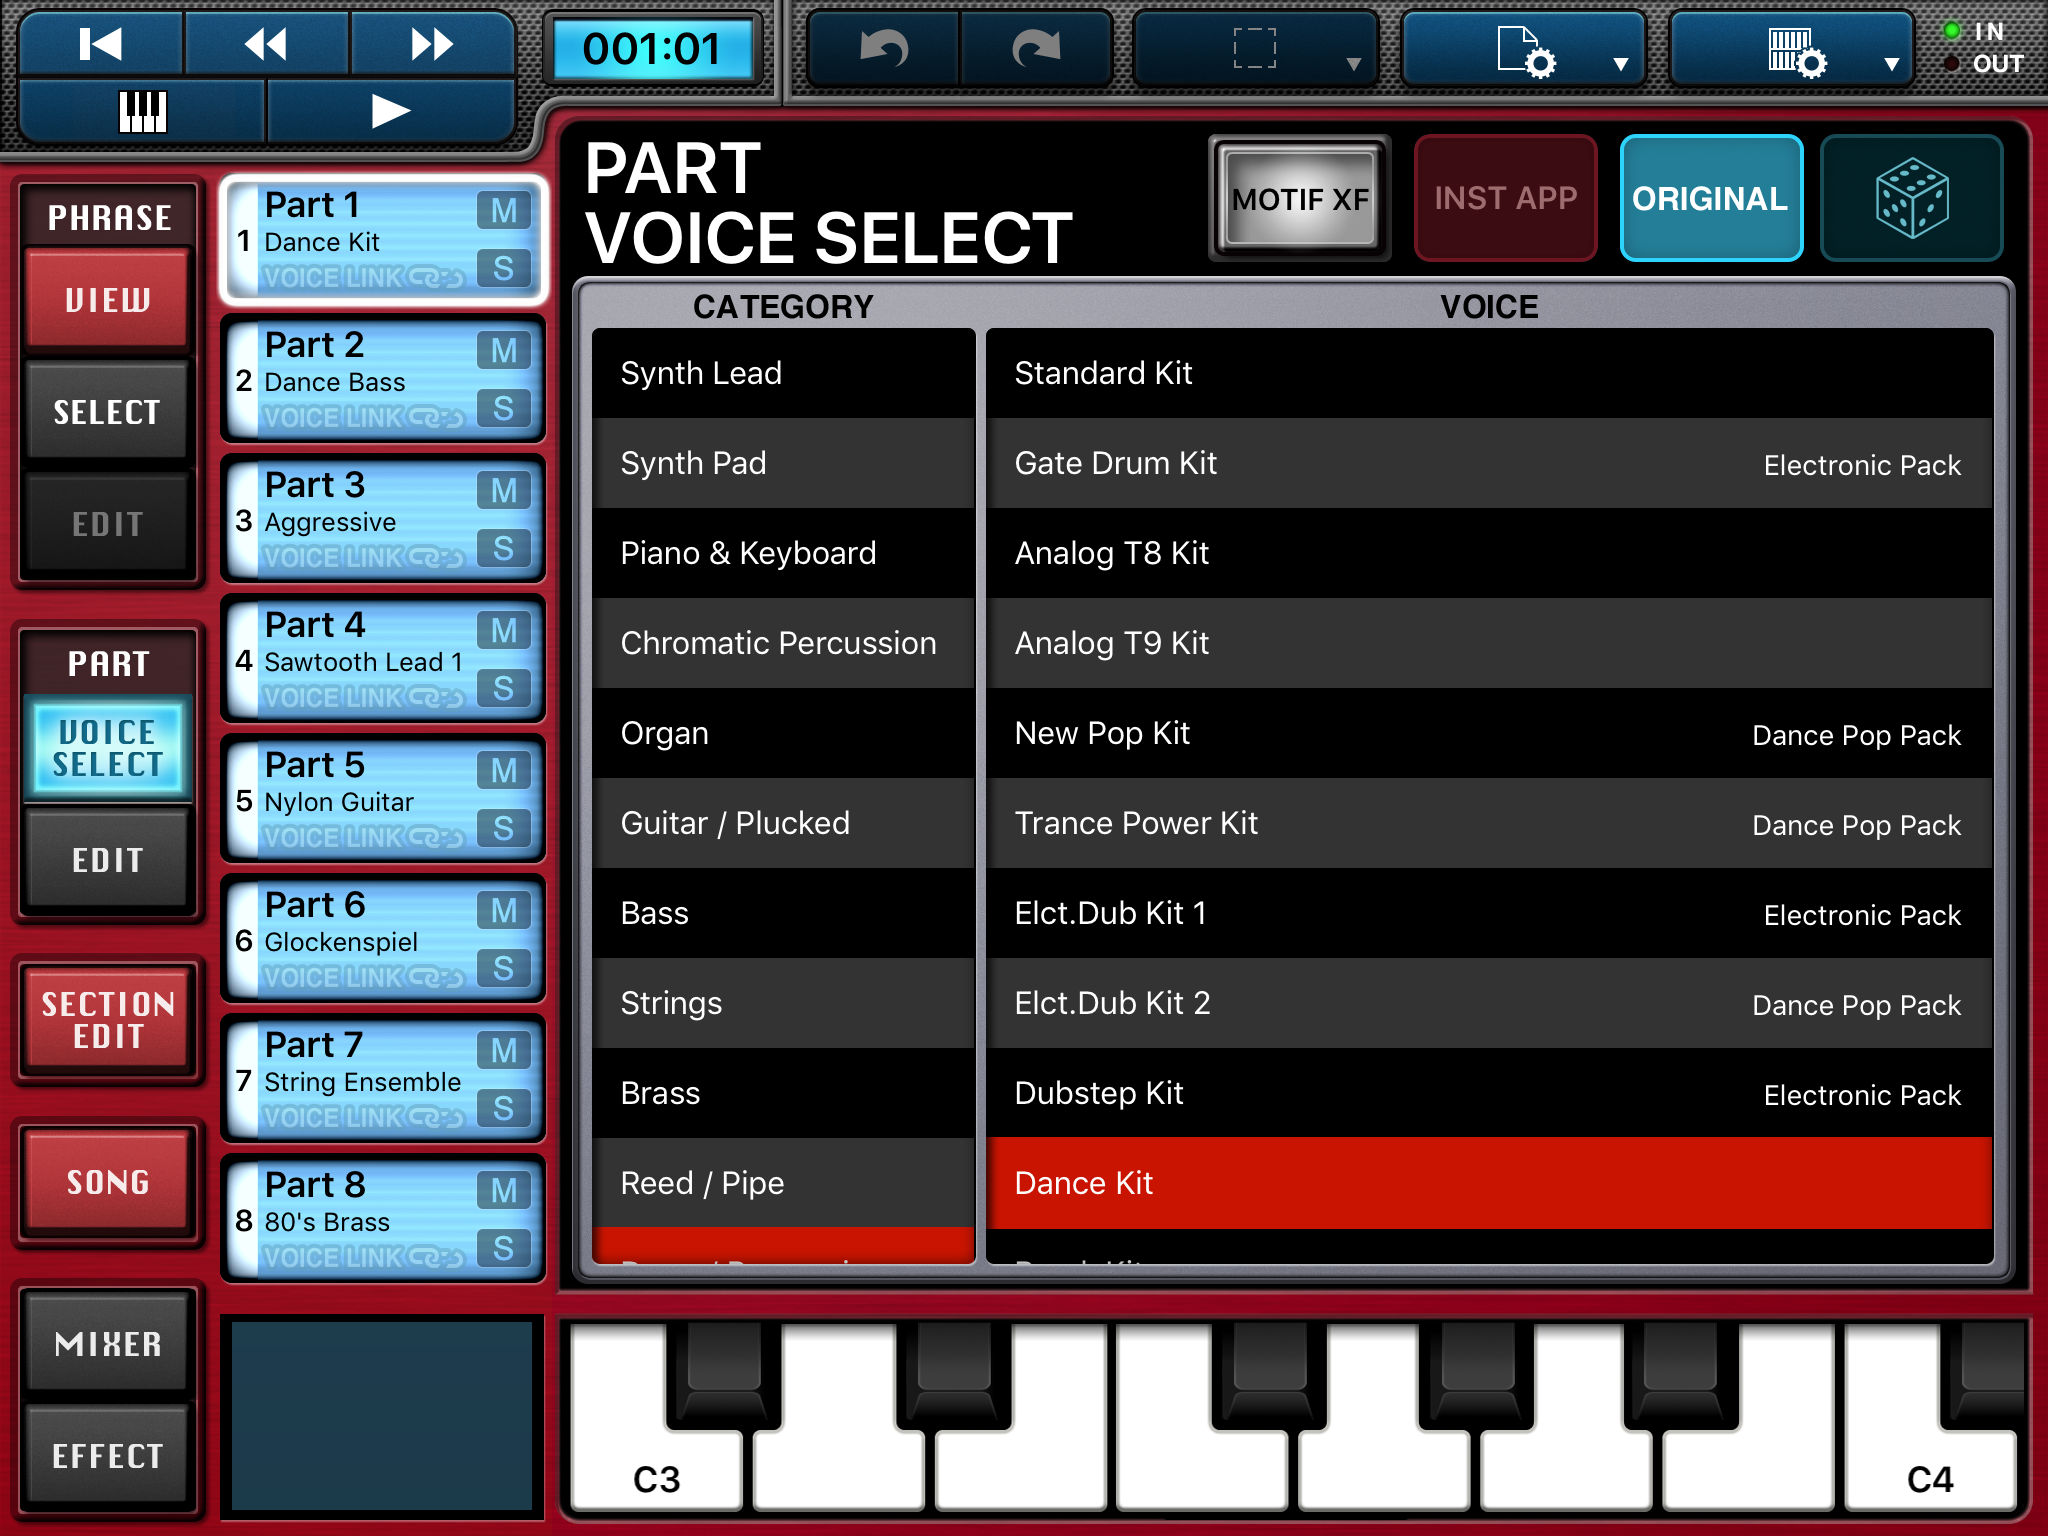 Bass Voice. Music selection Screen. Voice part